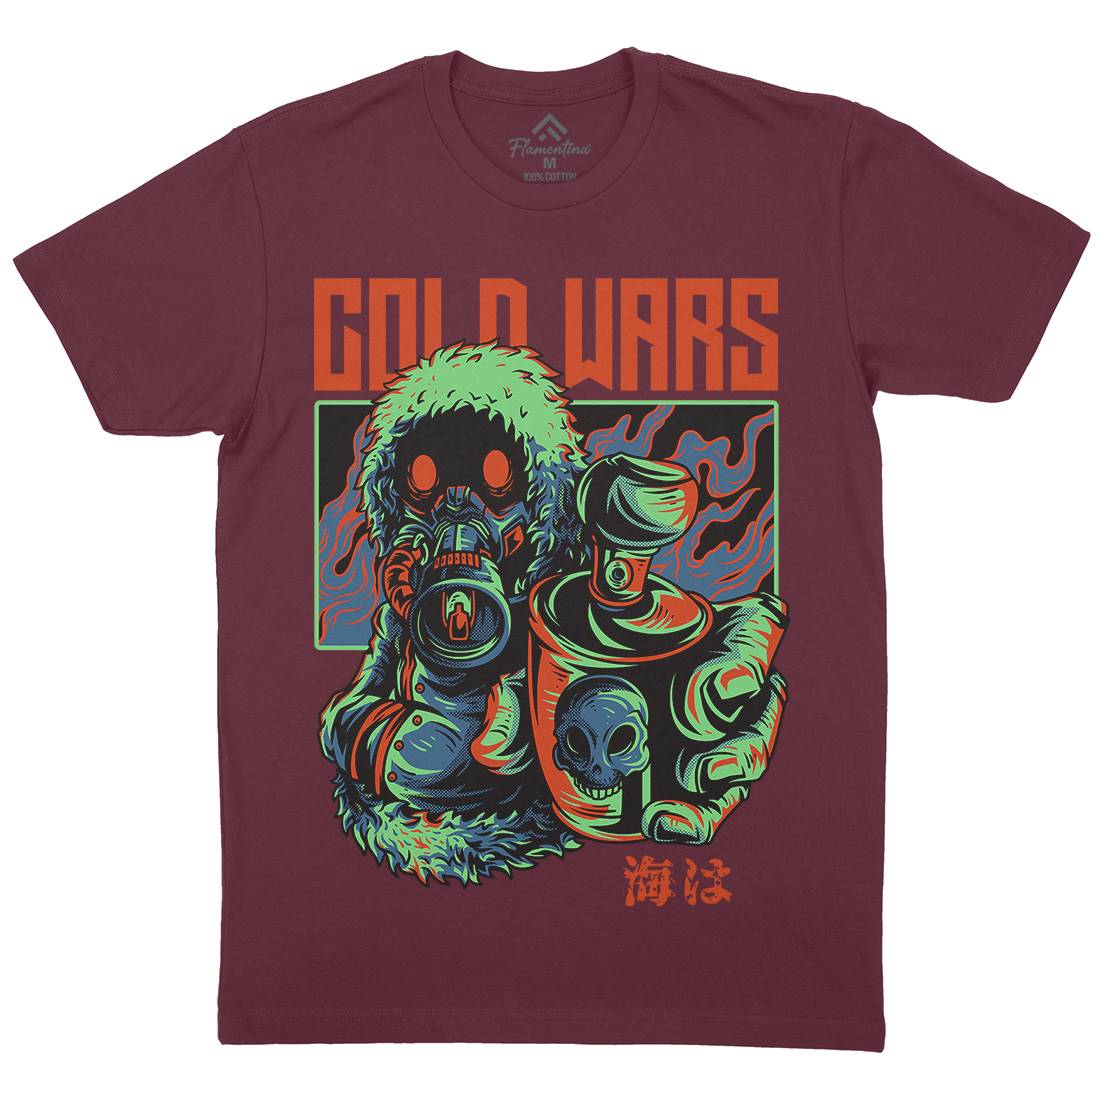 Cold Wars Mens Crew Neck T-Shirt Graffiti D727